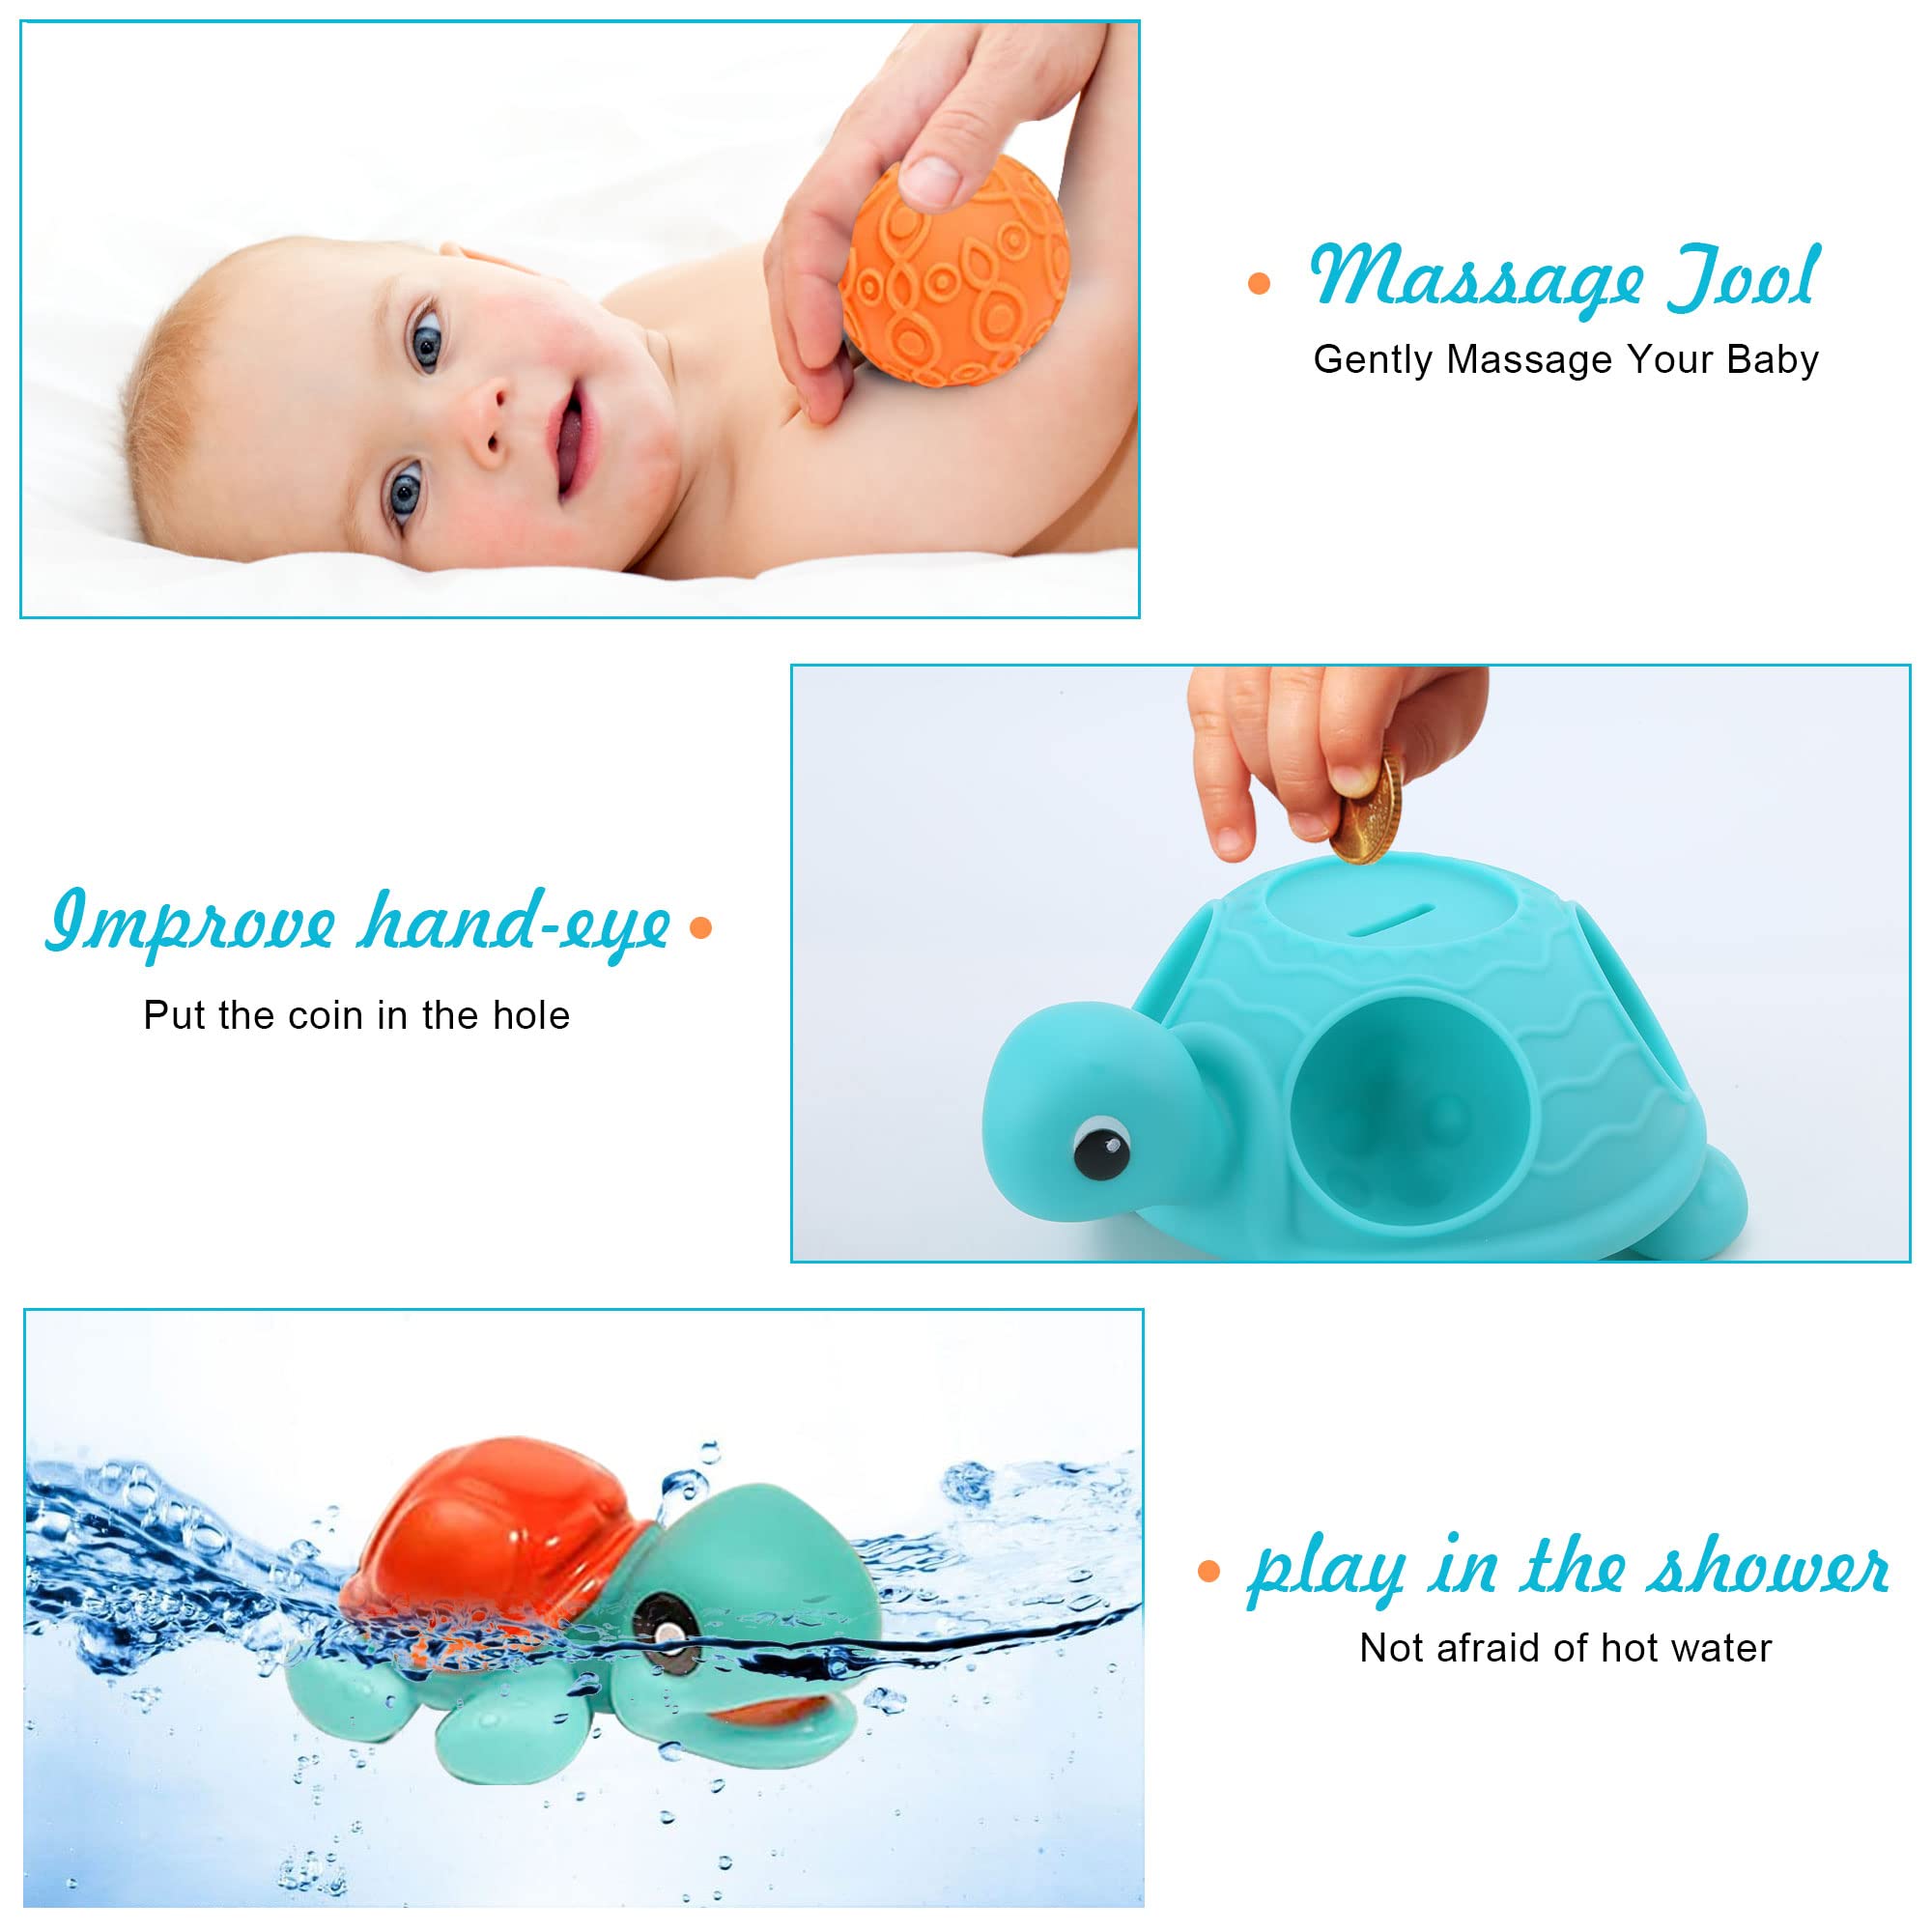 ROHSCE Baby Textured Multi Sensory Toys Massage Ball Gift Set, 9 Balls Kit and 2 Sensory Turtle Toy Kit with Sensory Balls, Montessori Infant Baby Toys 6 to 12 Months 6 Pack